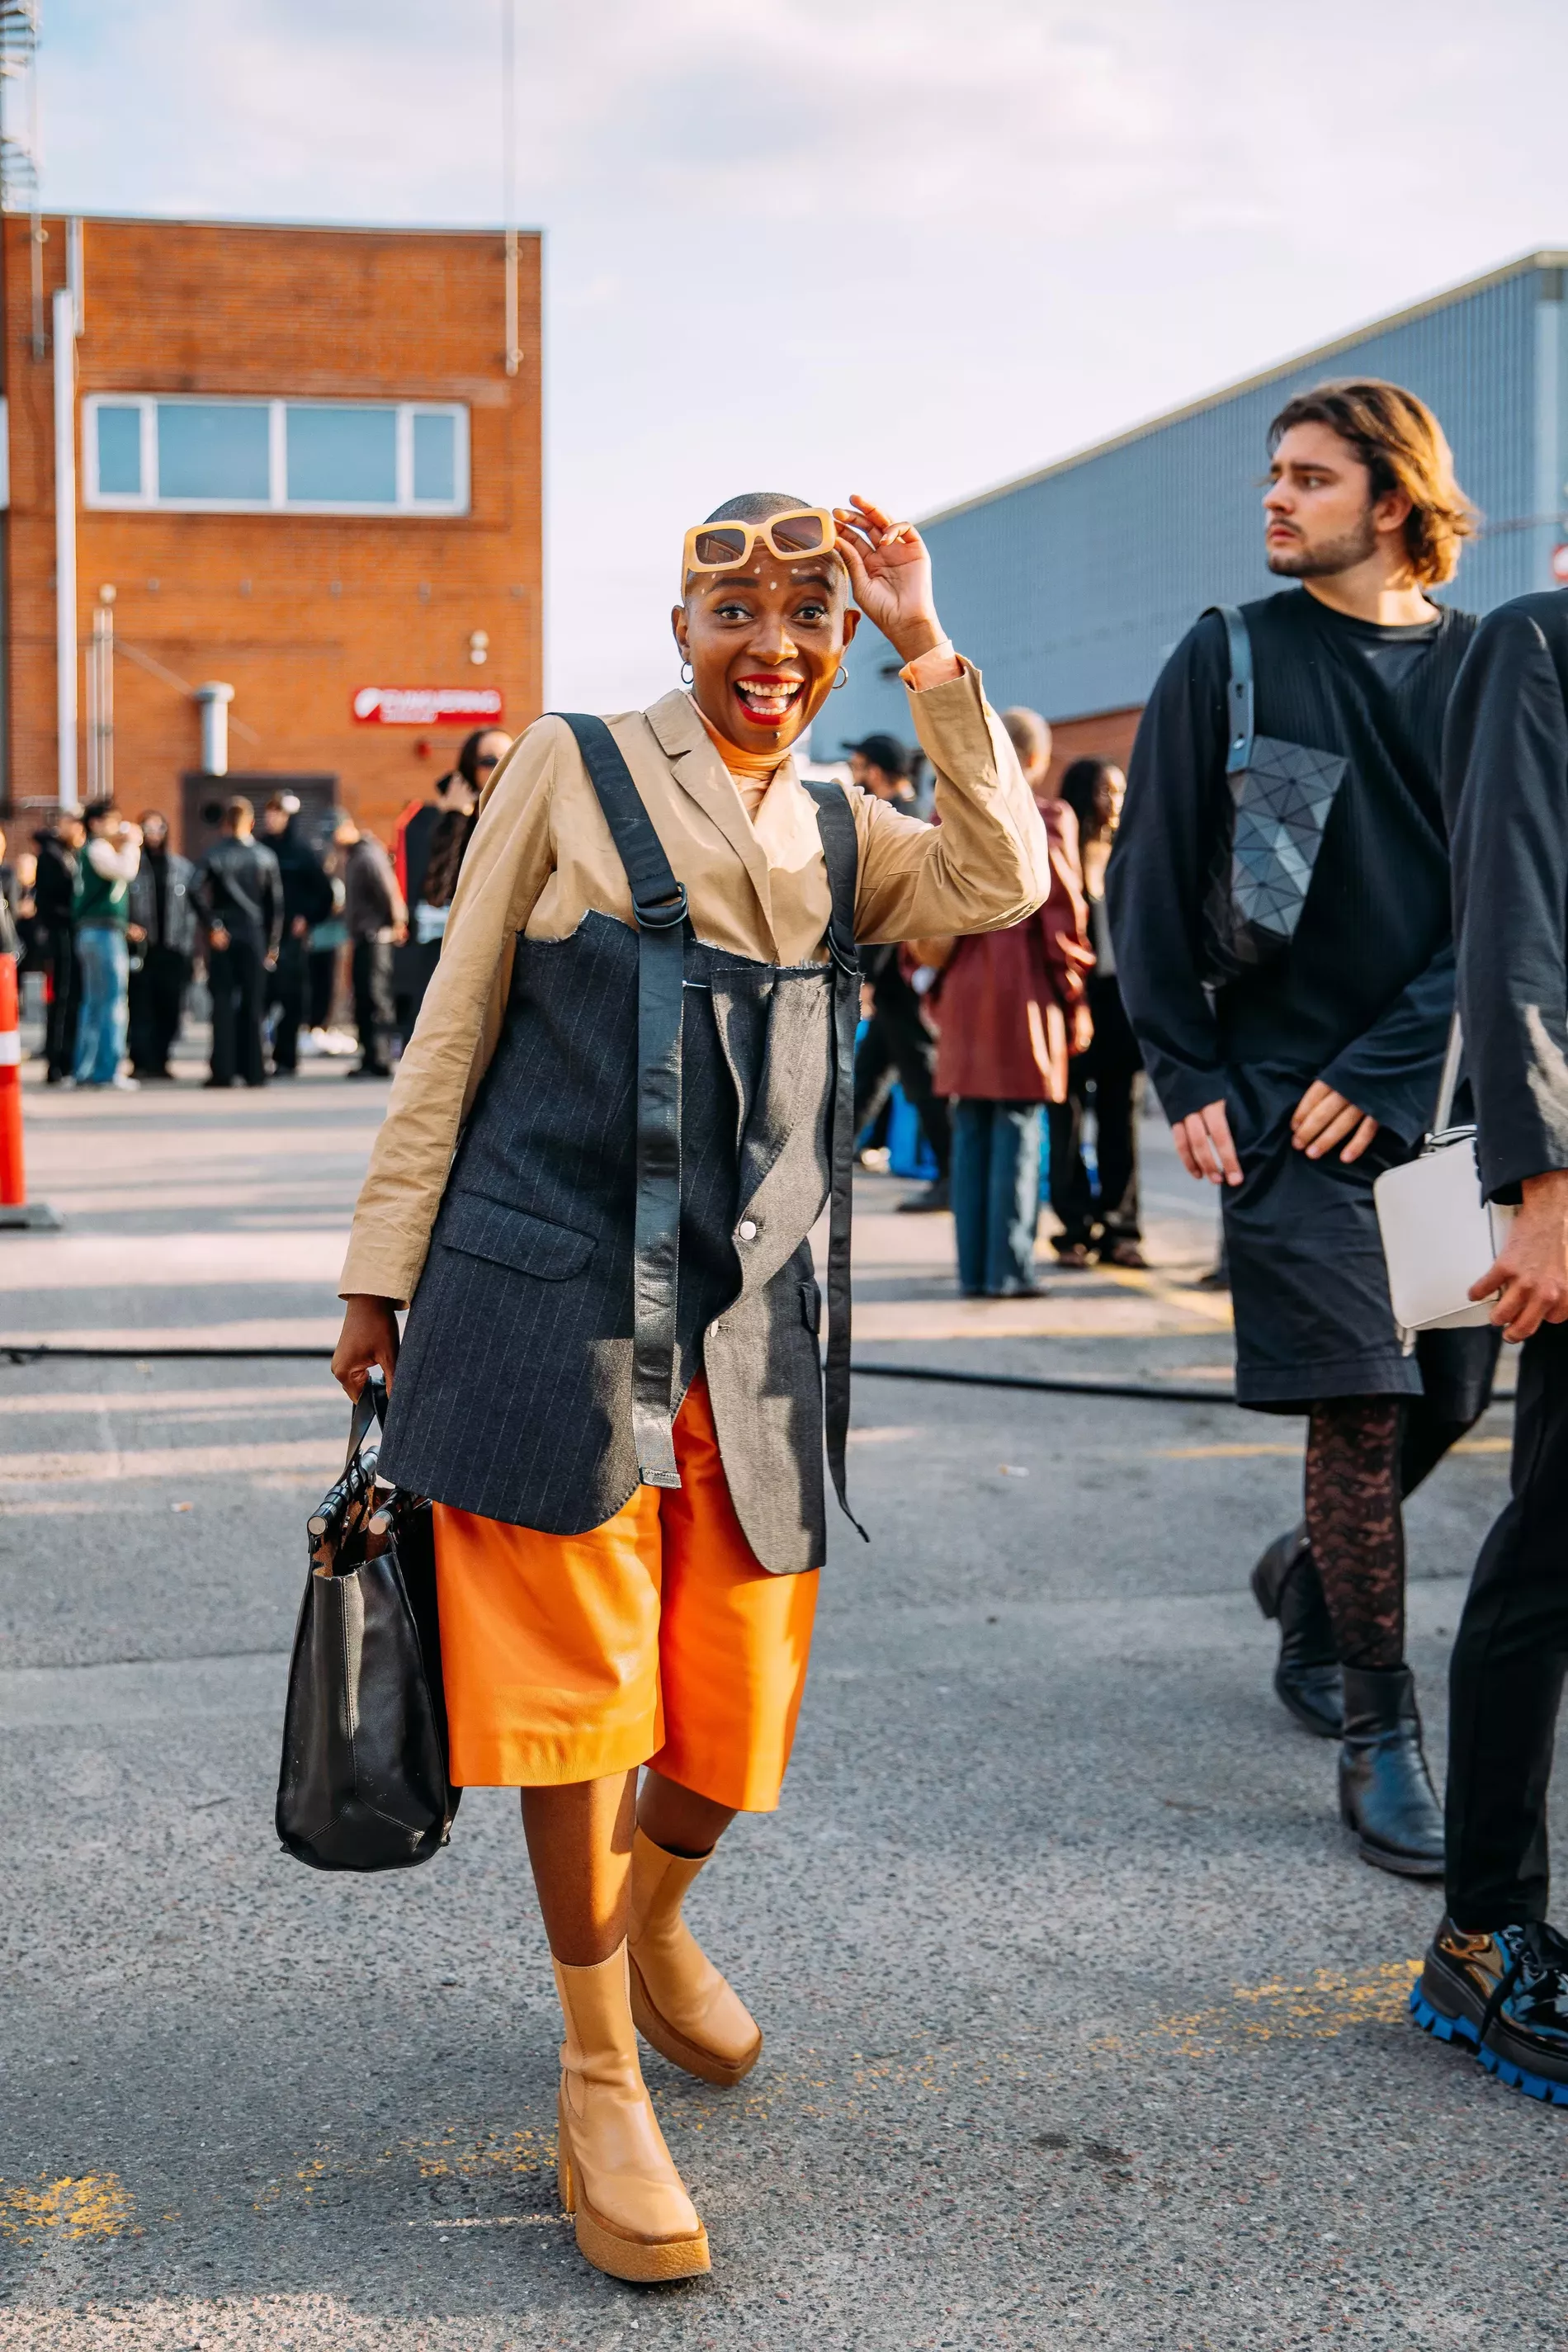 Copenhagen Fashion Week guest wears pinstripe vest over beige suit and orange shorts